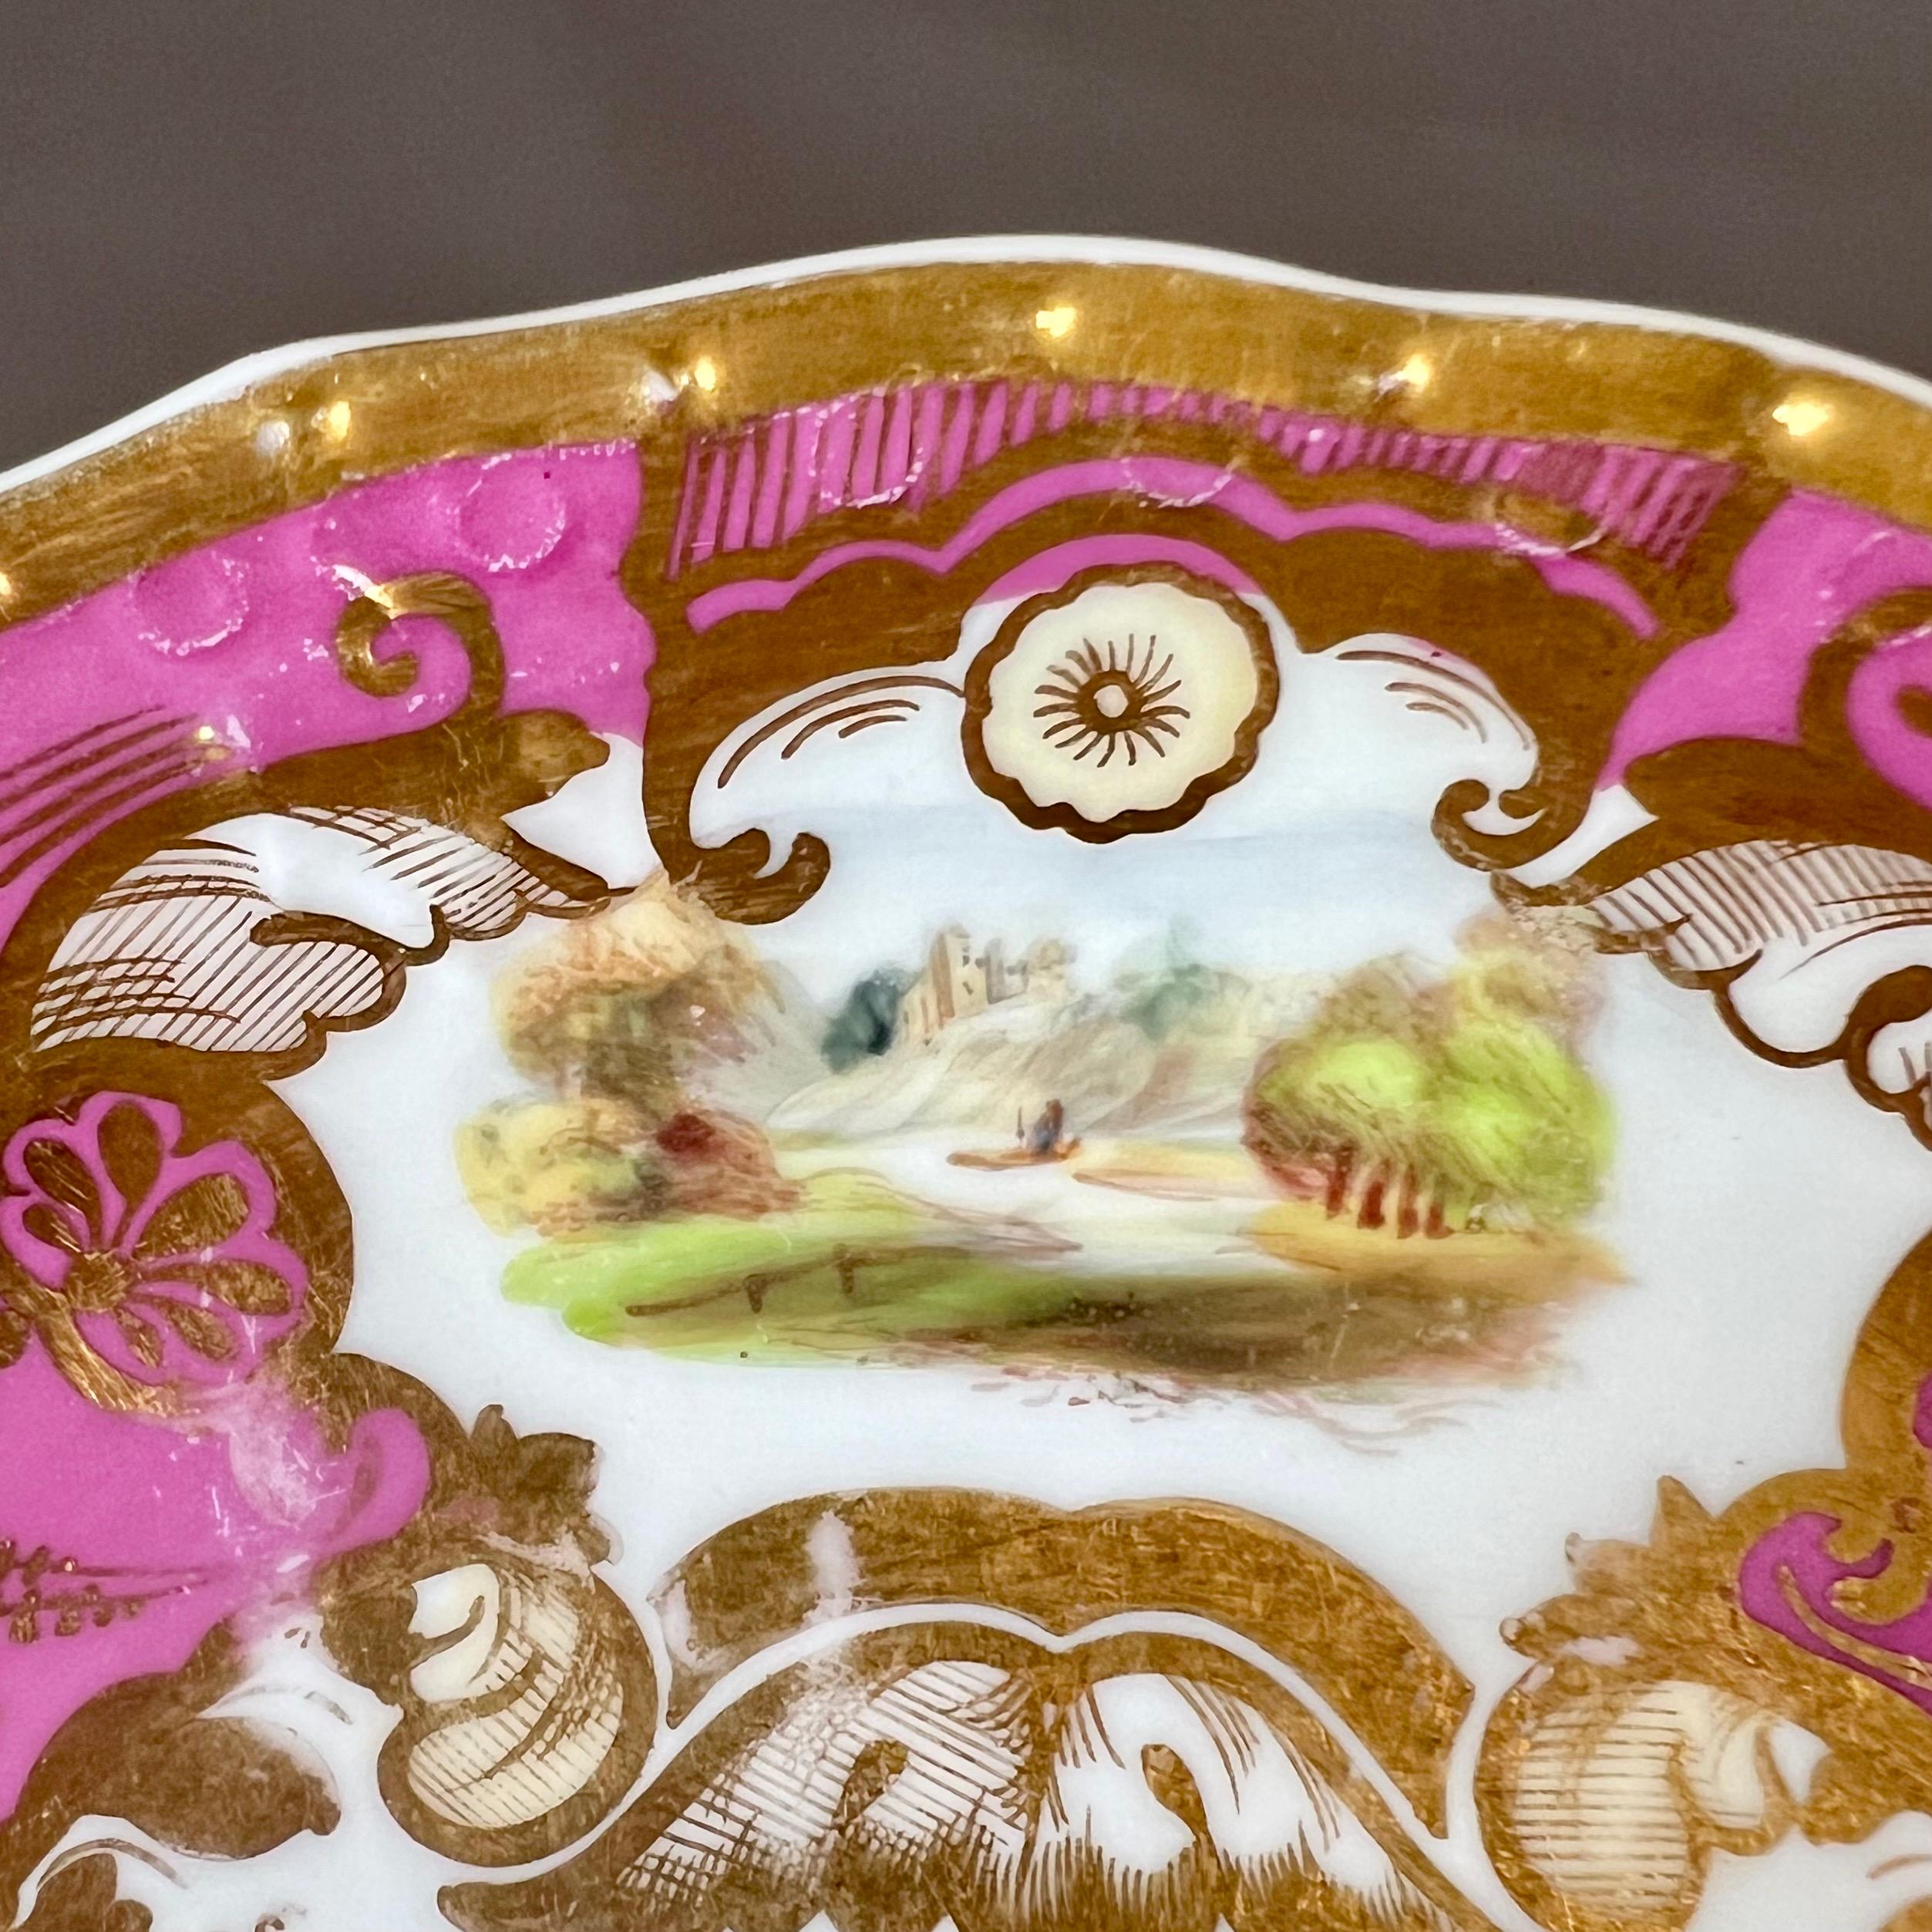 Samuel Alcock Porcelain Teacup Trio, Pink, Gilt and Sublime Landscapes, ca 1827 6